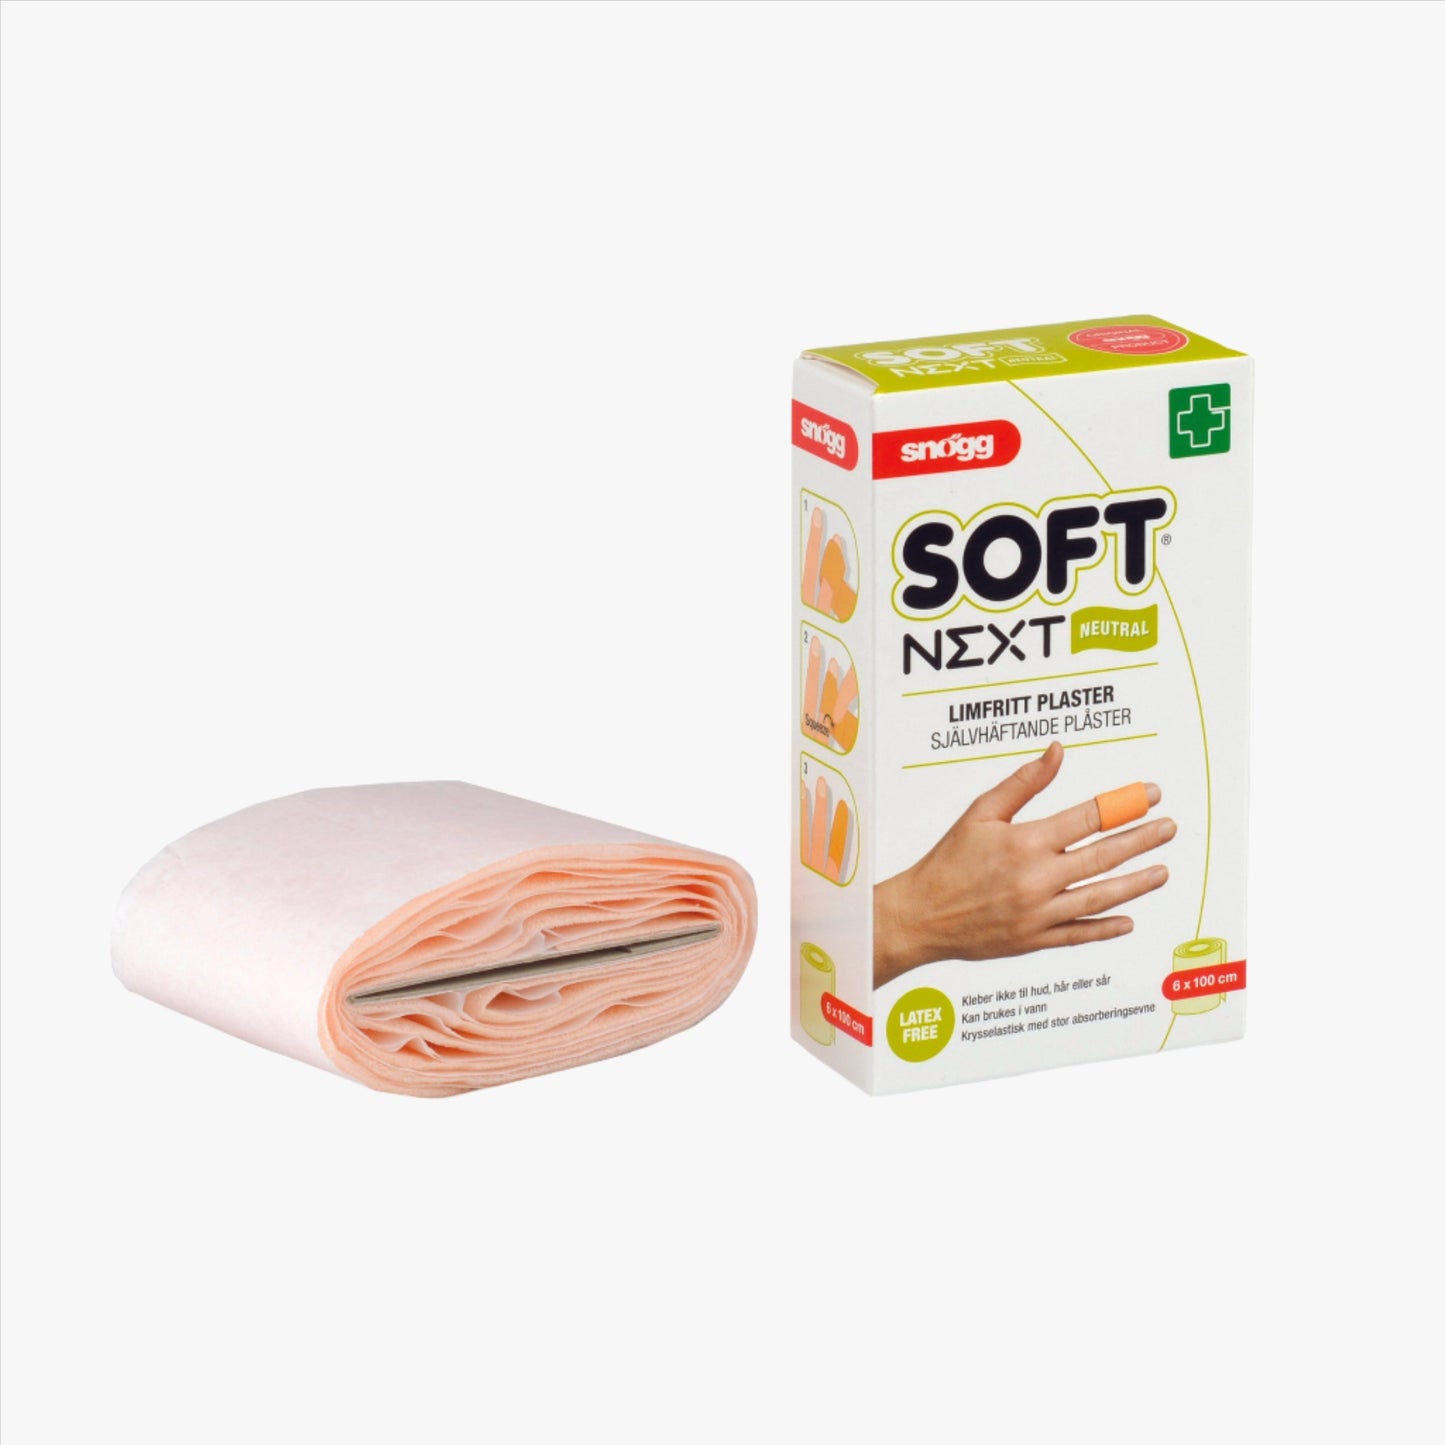 Snögg Soft Next Finger bandage 6 x 100 cm